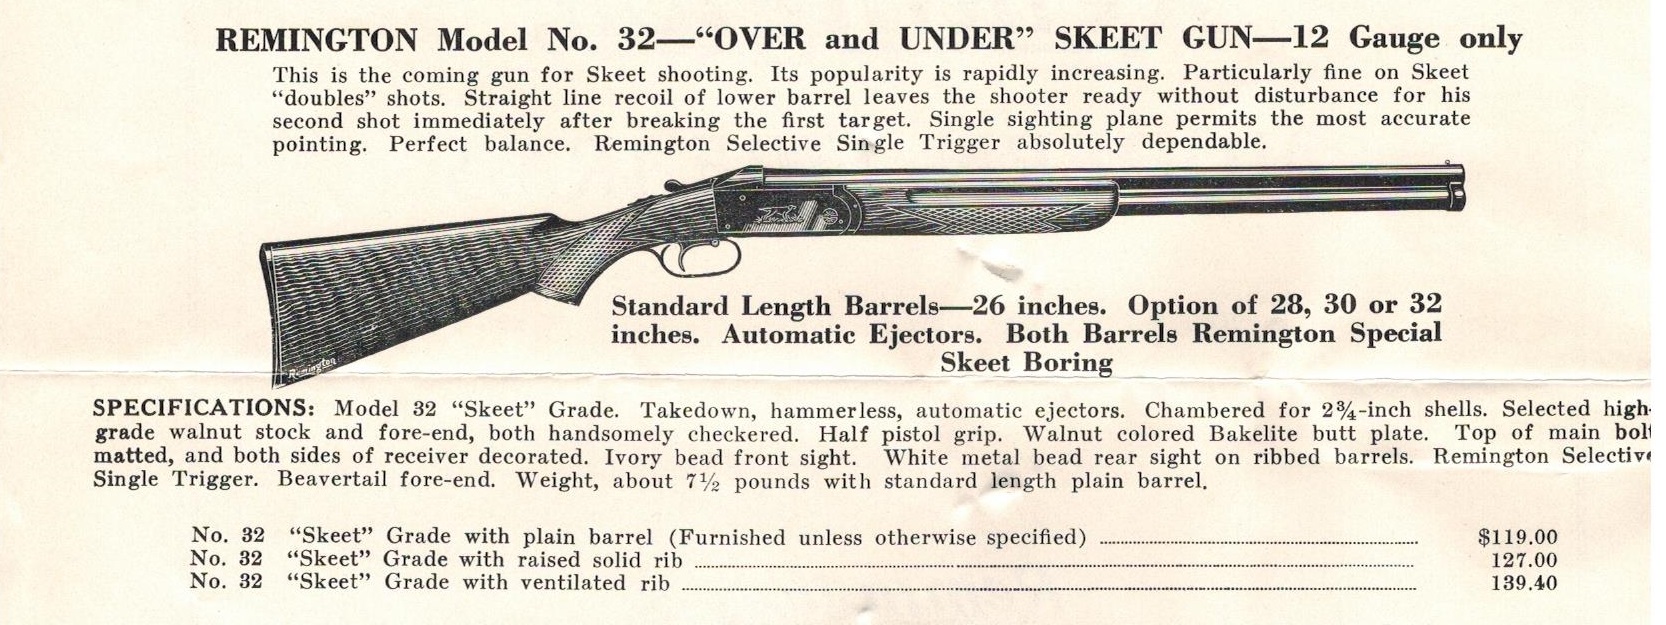 Model 32 Skeet Gun, March 6, 1936 catalog.jpeg